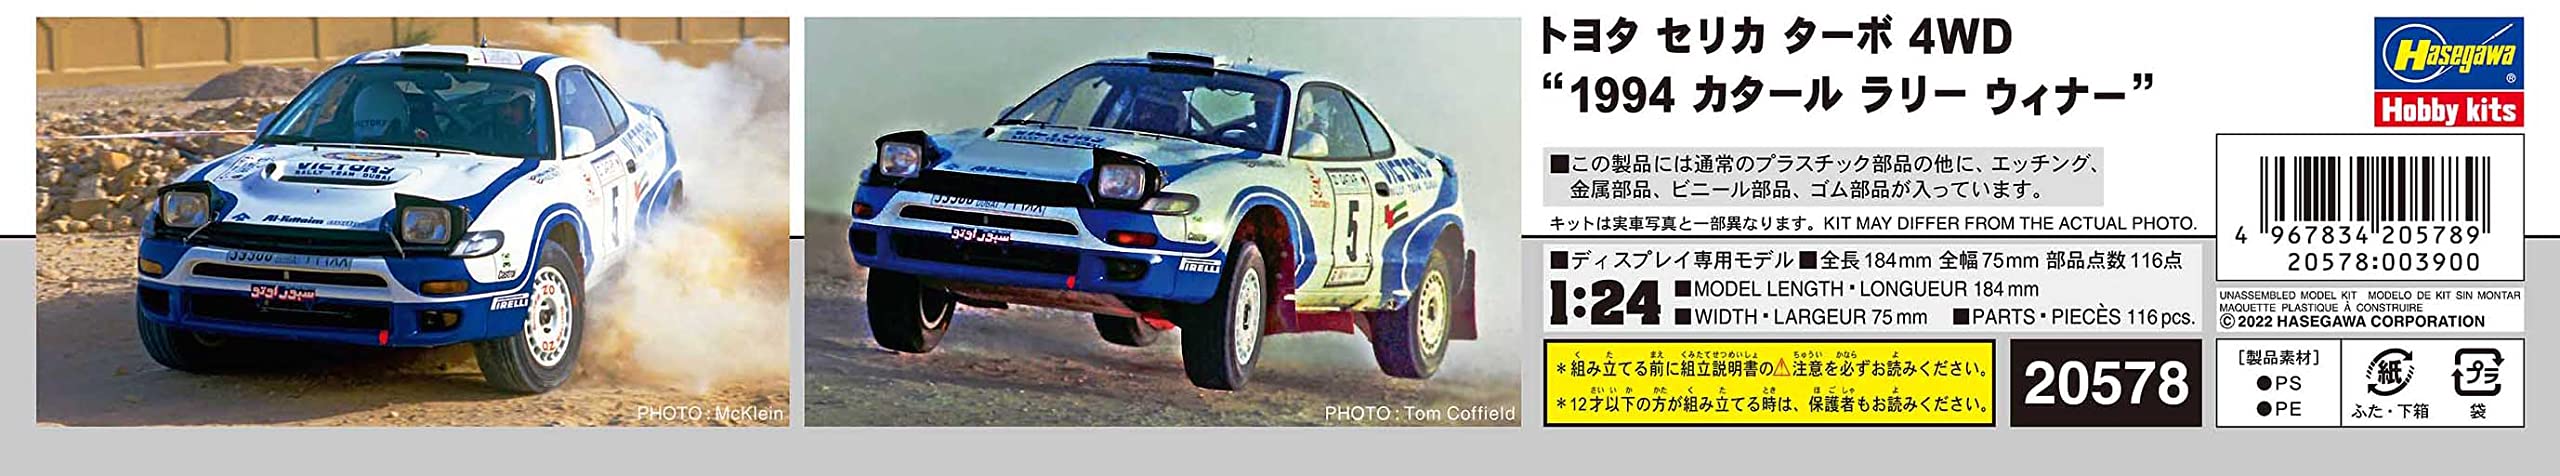 HASEGAWA 1/24 Toyota Celica Turbo 4Wd '1994 Qatar Rally Winner' Modèle en plastique